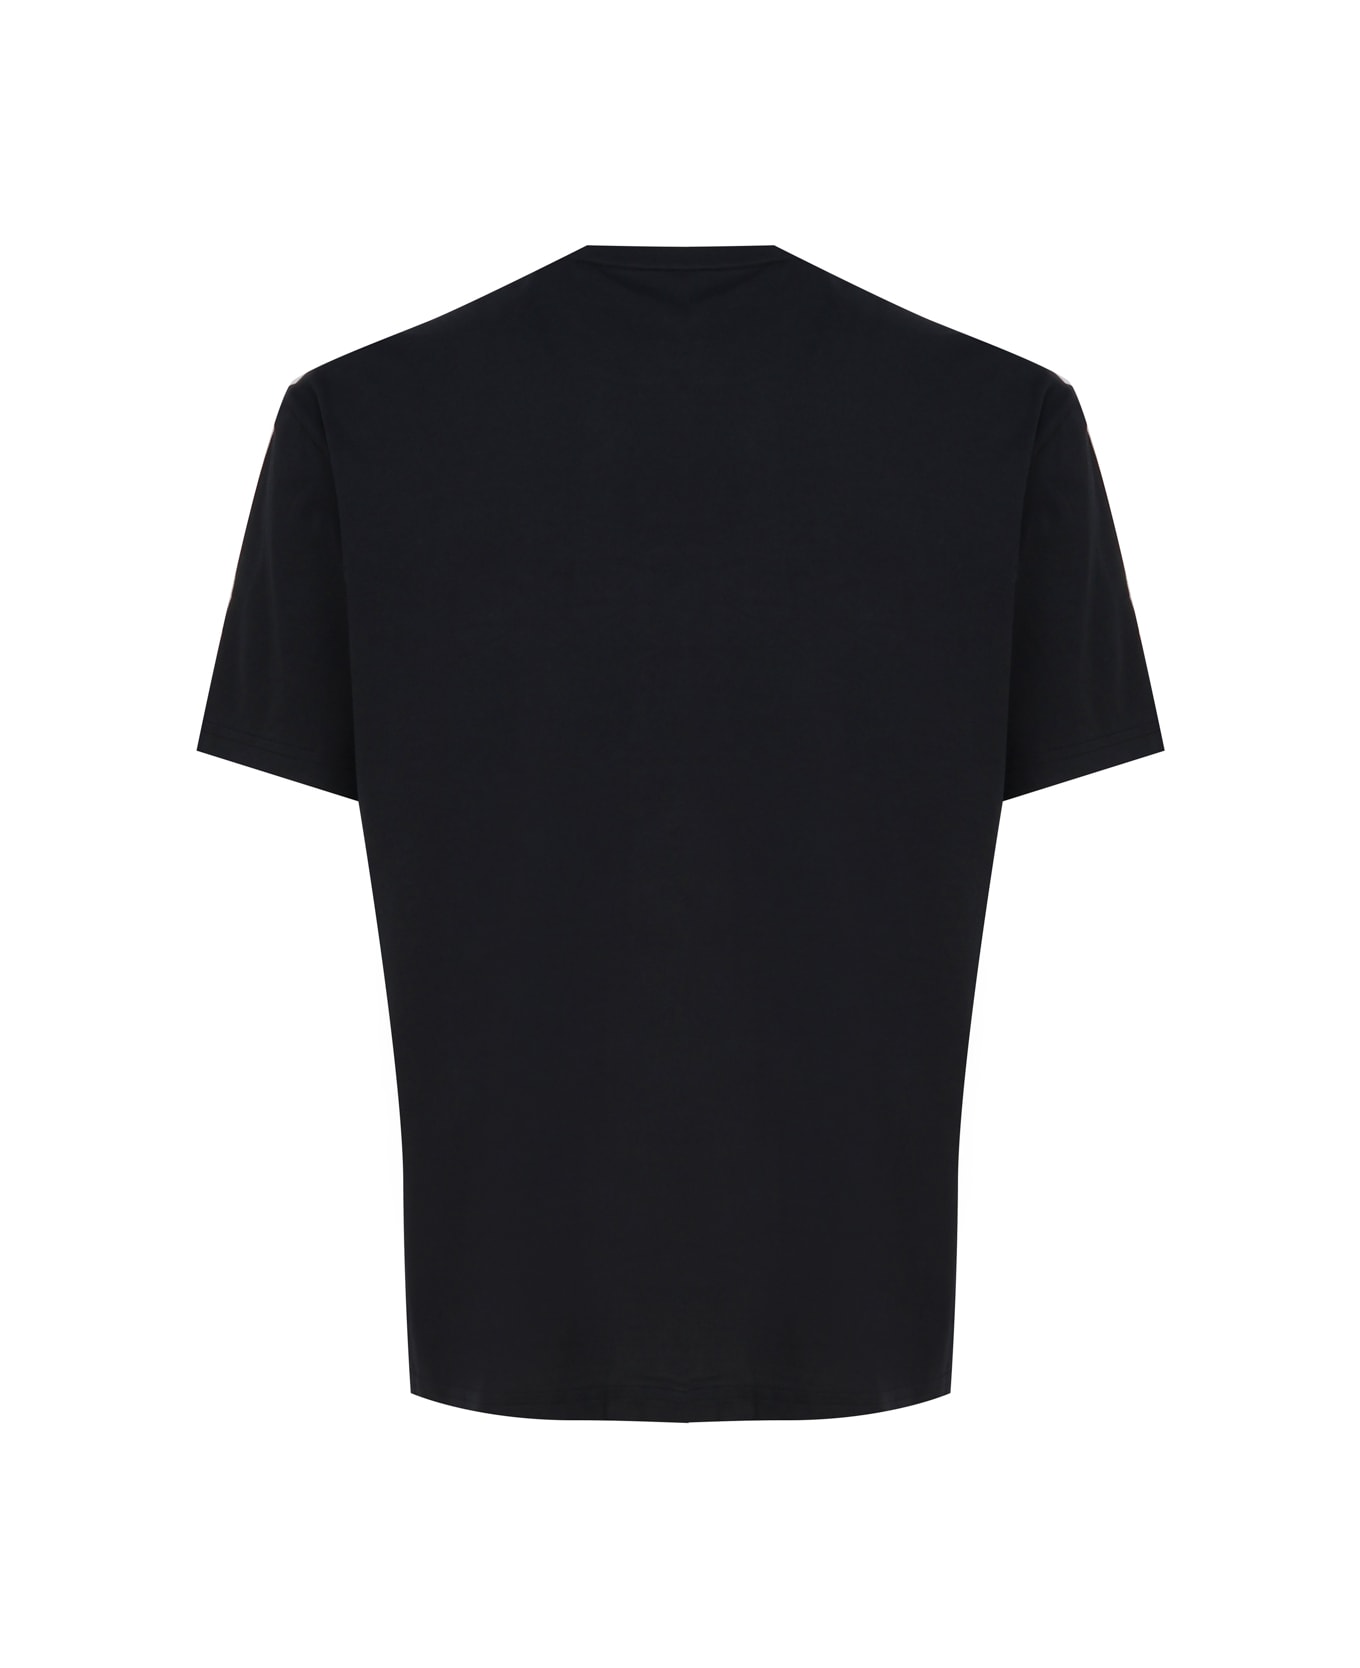 Hugo Boss T-shirt With Print - Black シャツ